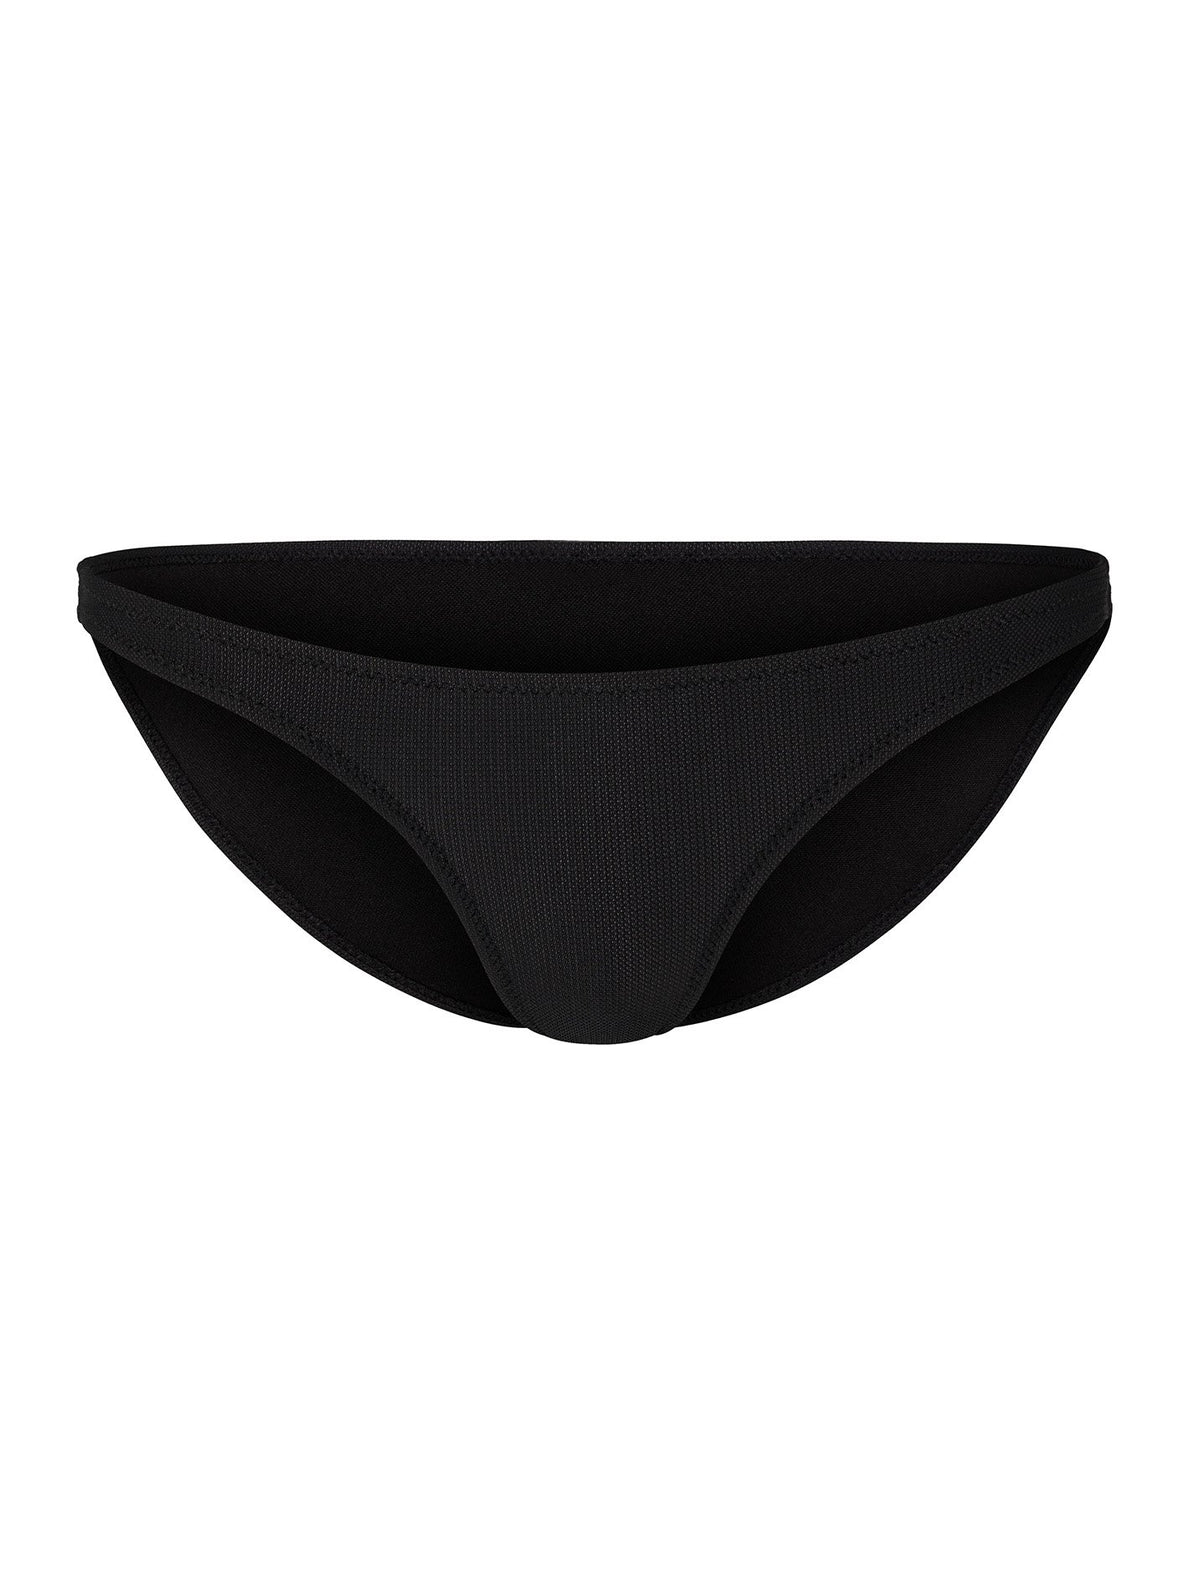 Simply Mesh Hipster Bikini Bottom - Black (O2212106_BLK) [20]